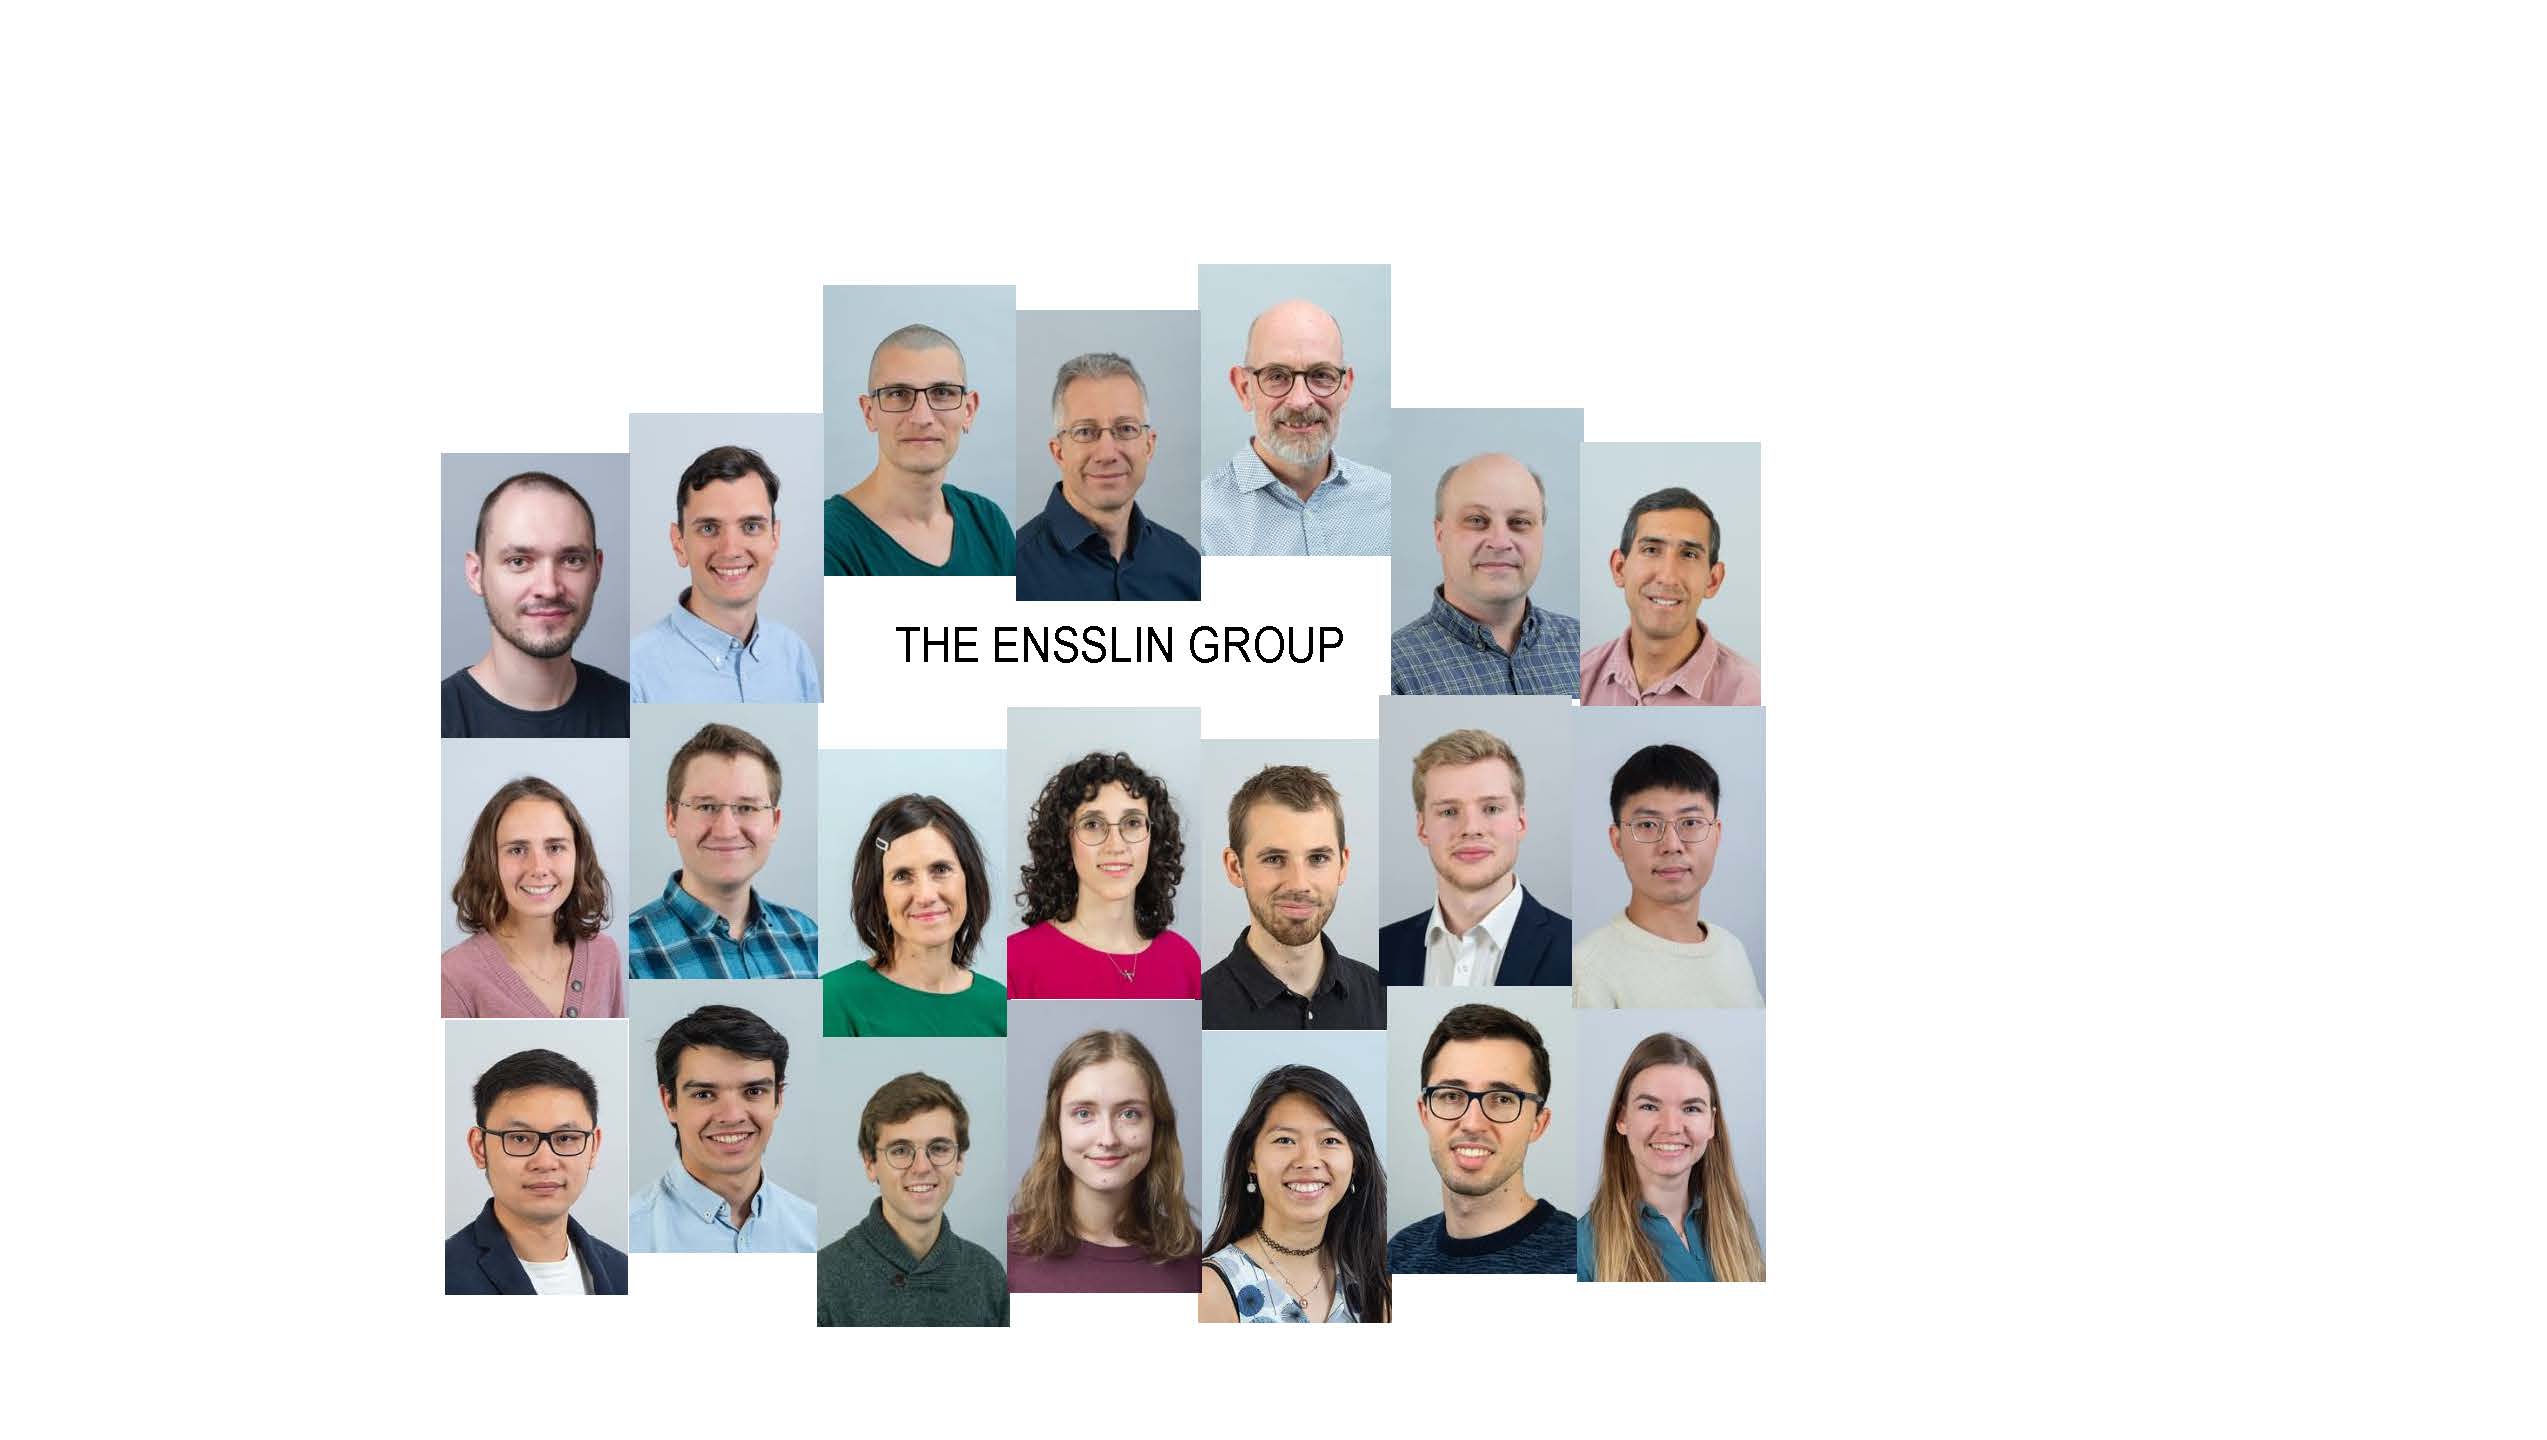 The Ensslin Group